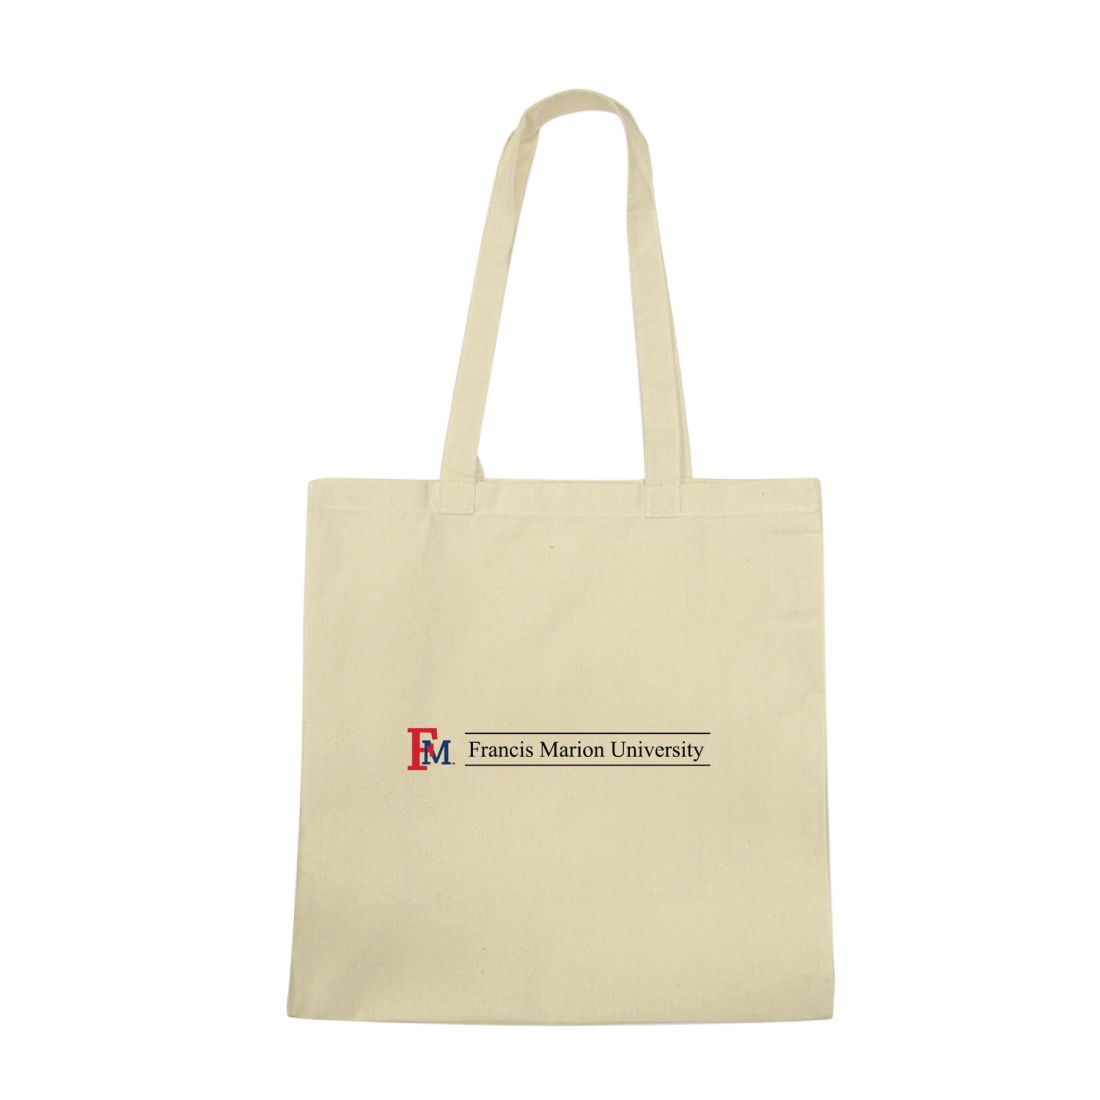 FMU Francis Marion University Patriots Institutional Tote Bag